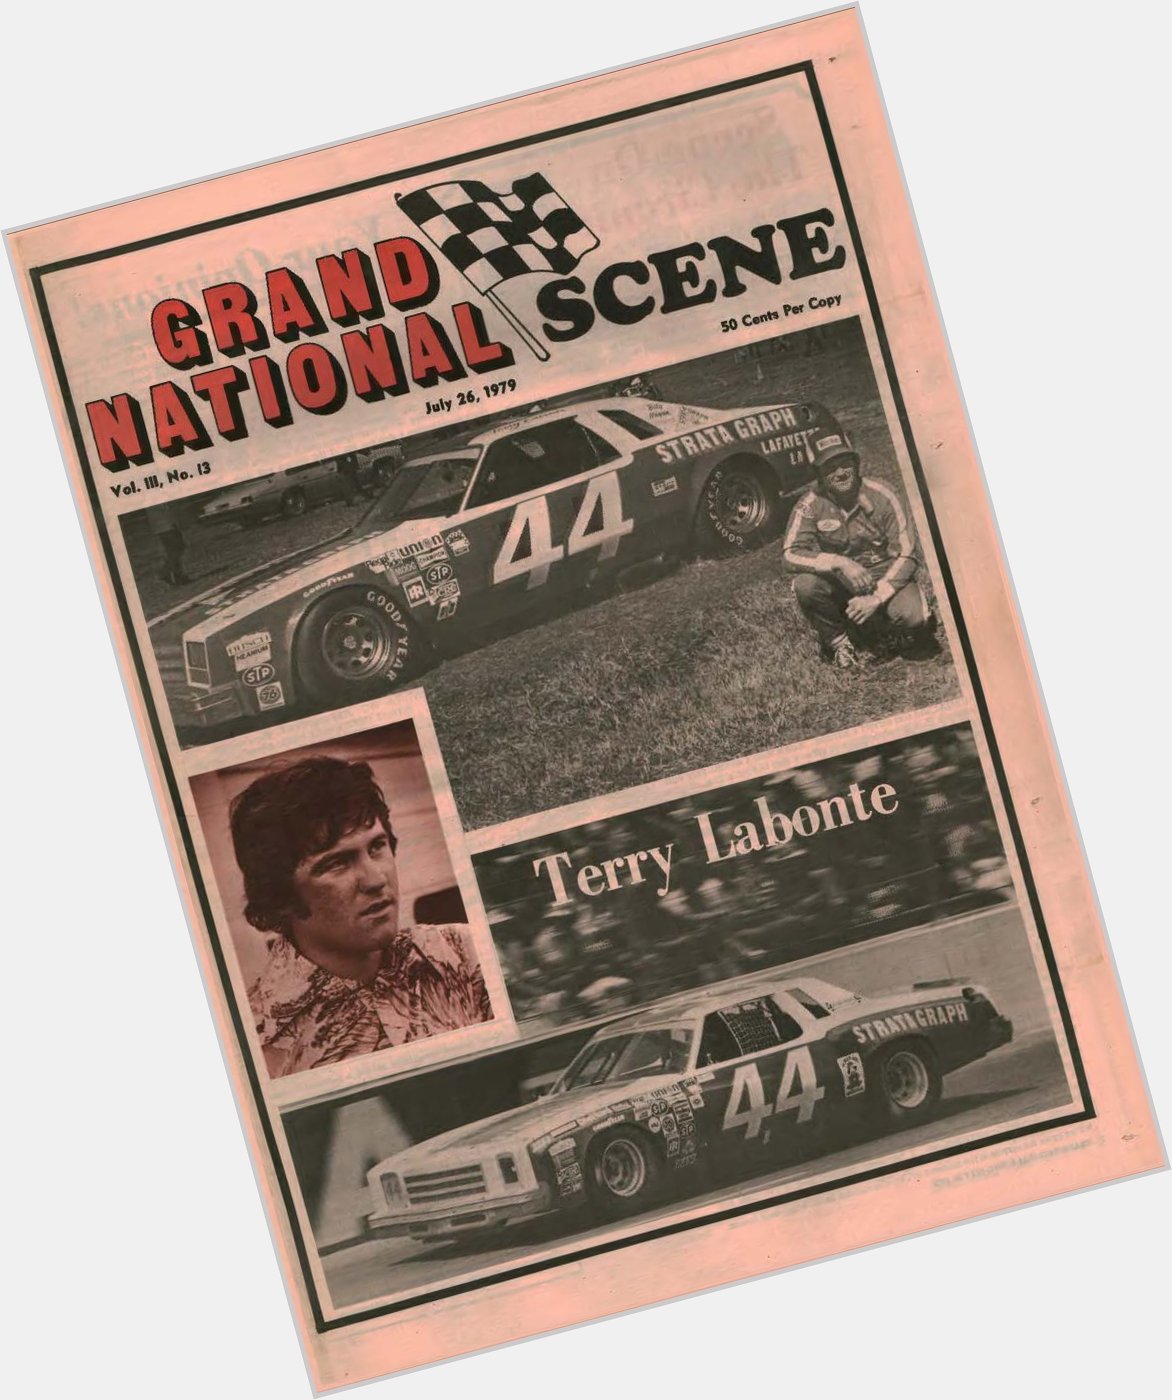 Happy birthday to Texas Terry Labonte! 7/26/79 